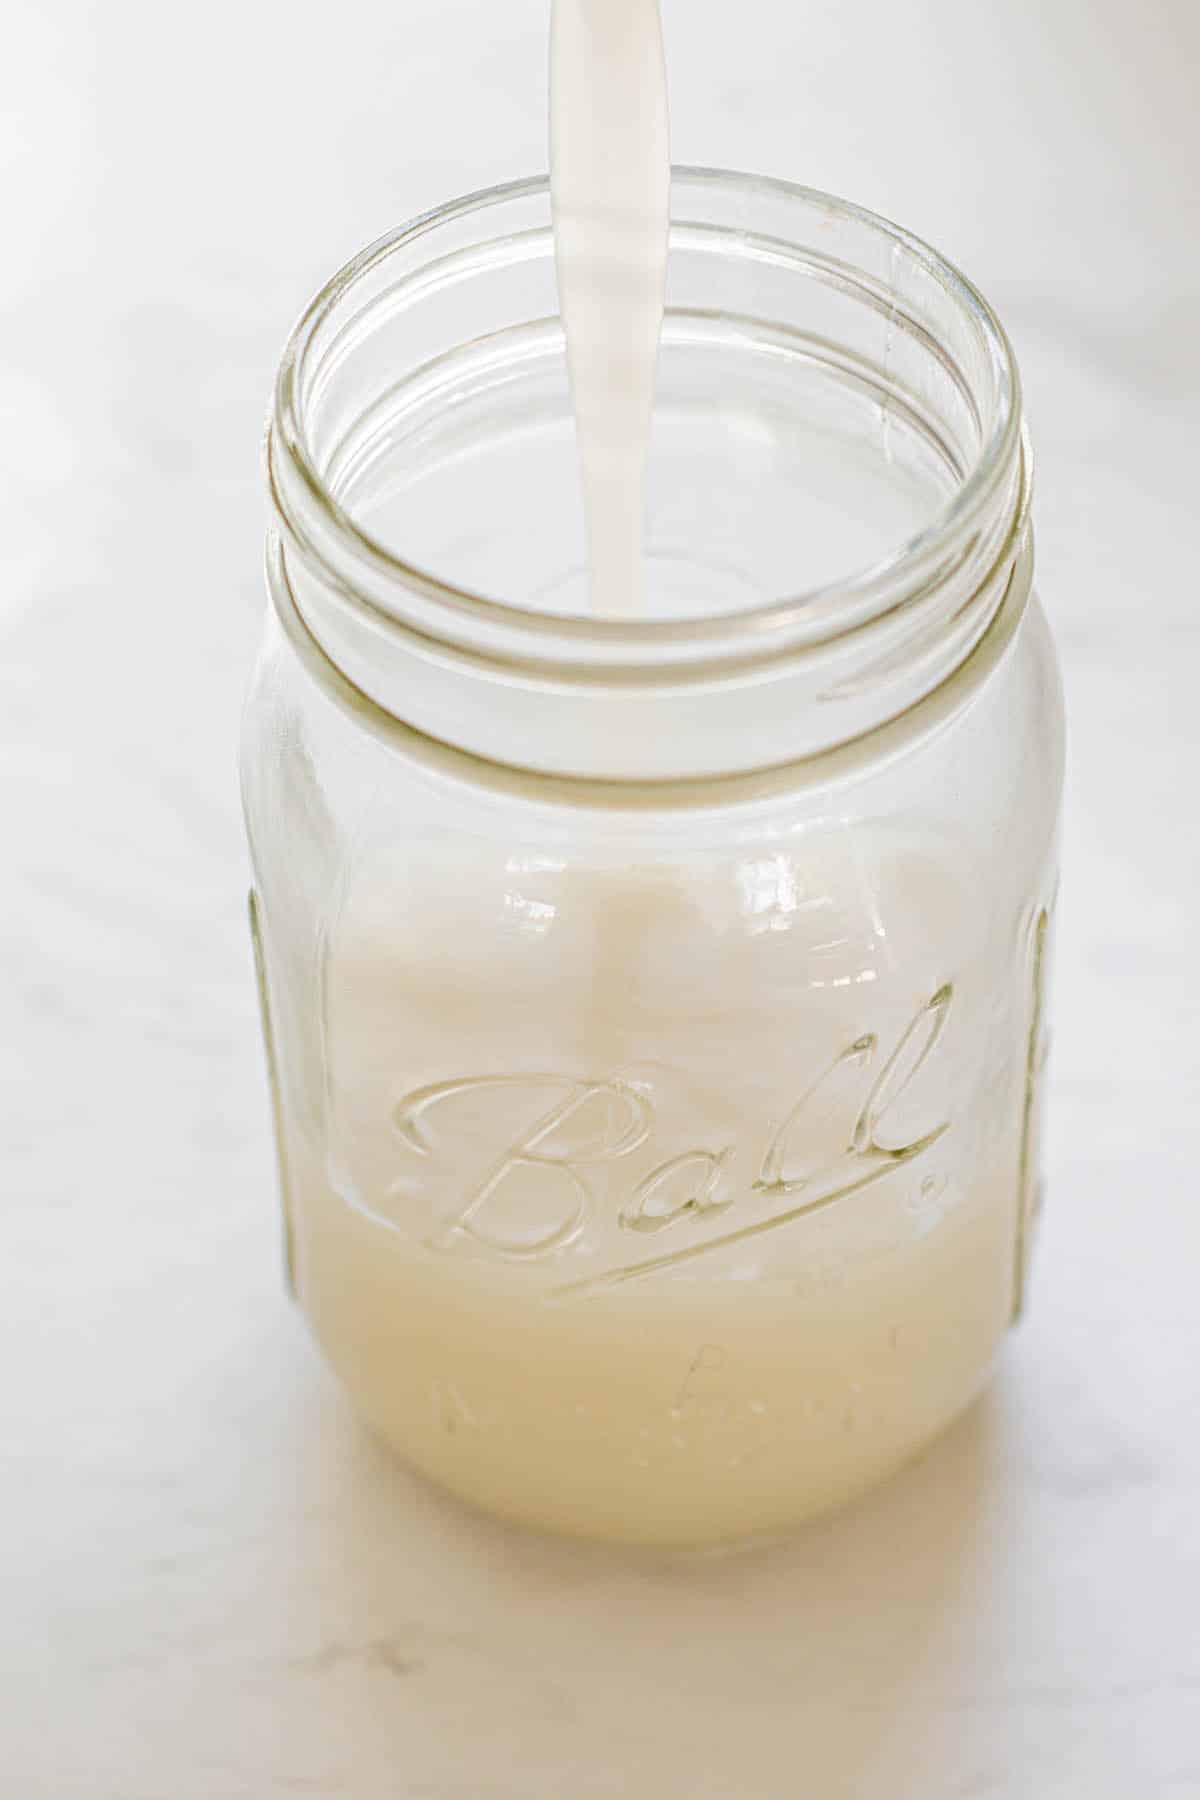 cream of coconut in ⅓rd of a glass mason jar.